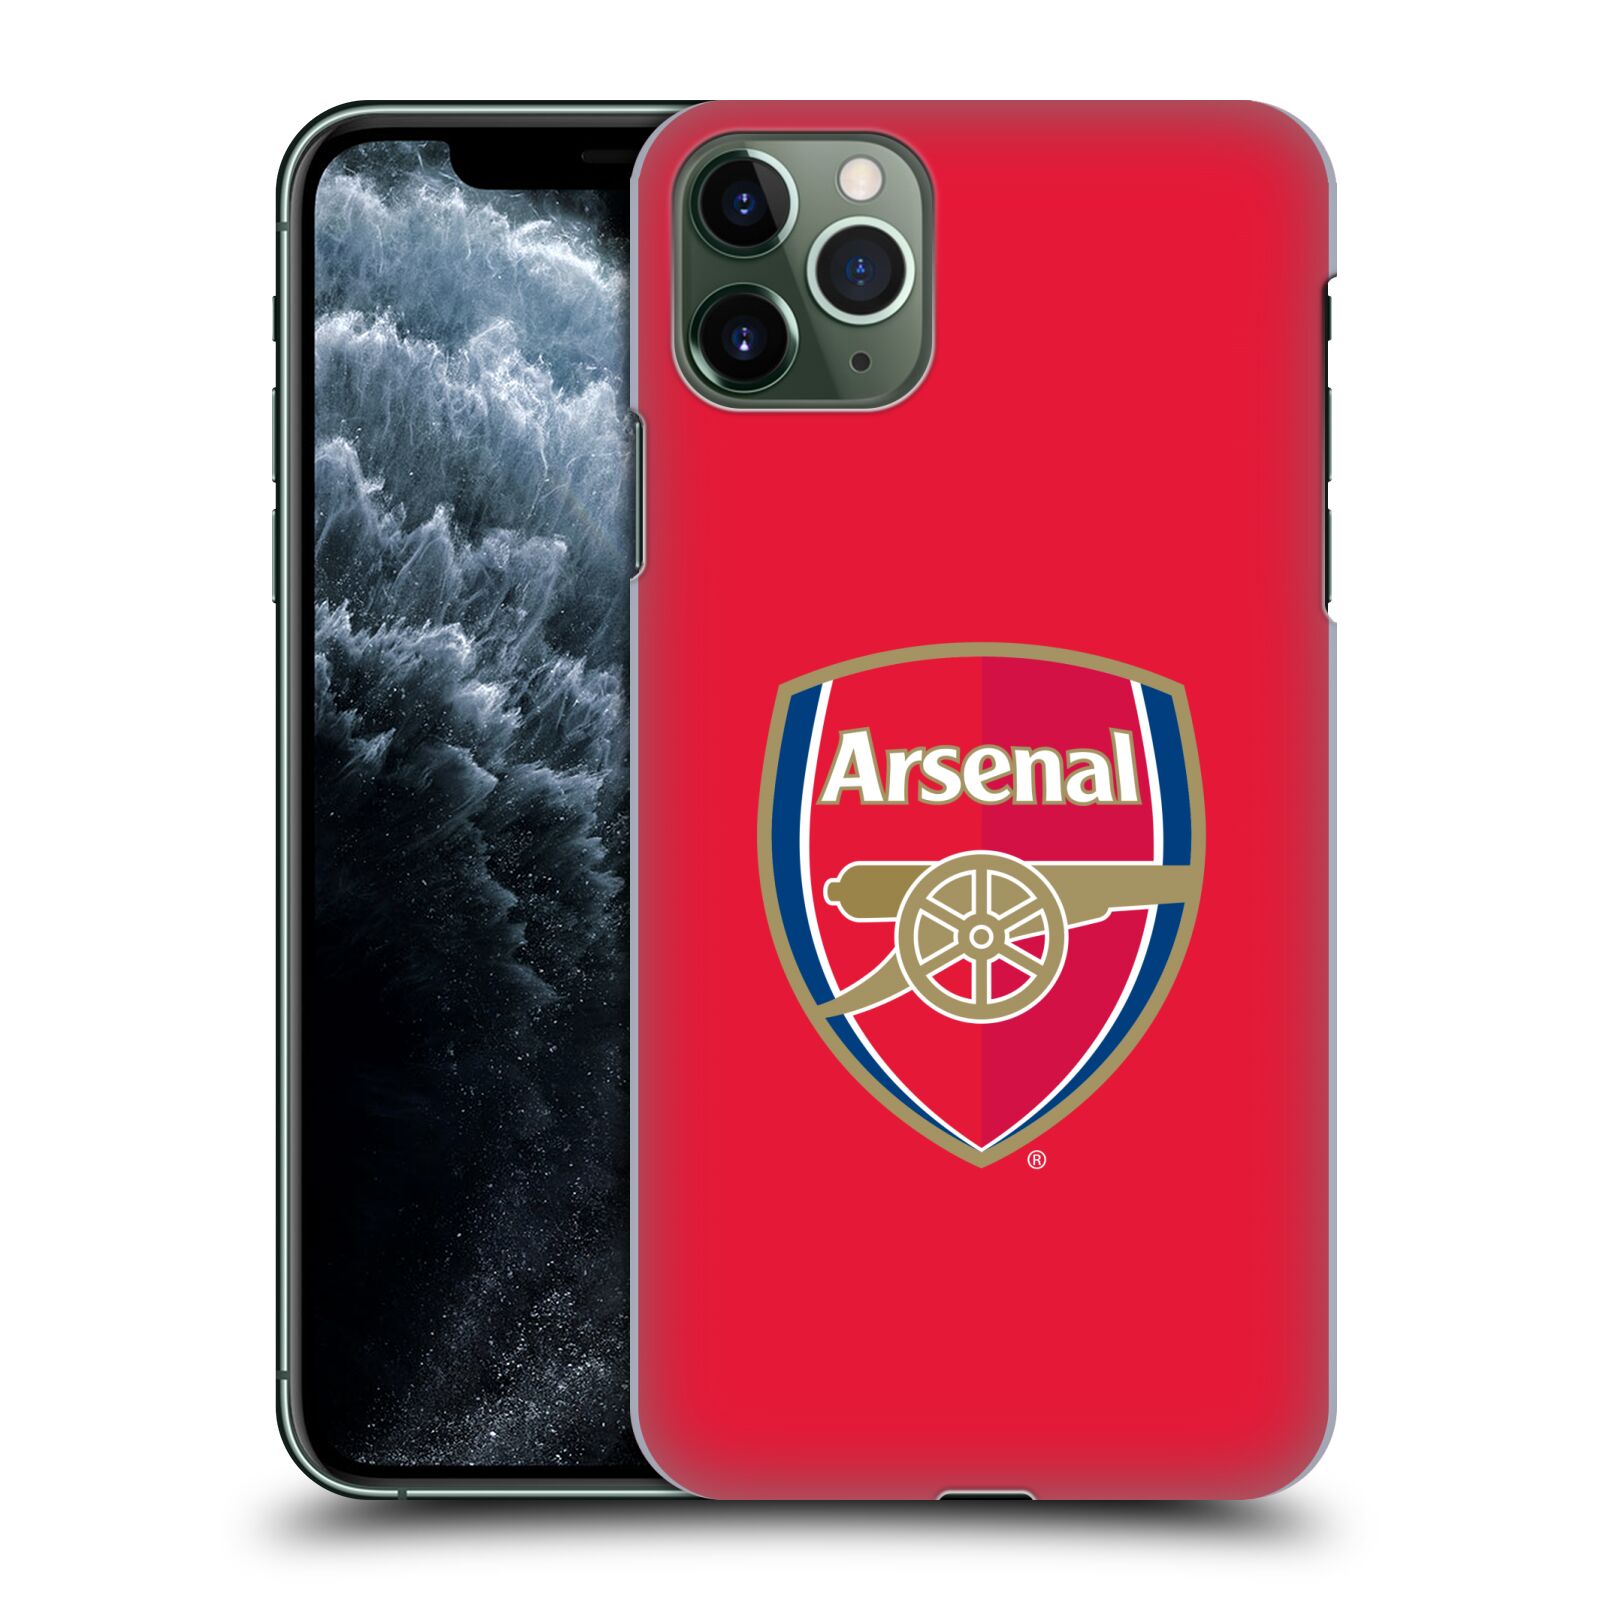 Pouzdro na mobil Apple Iphone 11 PRO MAX - HEAD CASE - Fotbalový klub Arsenal znak barevný červené pozadí